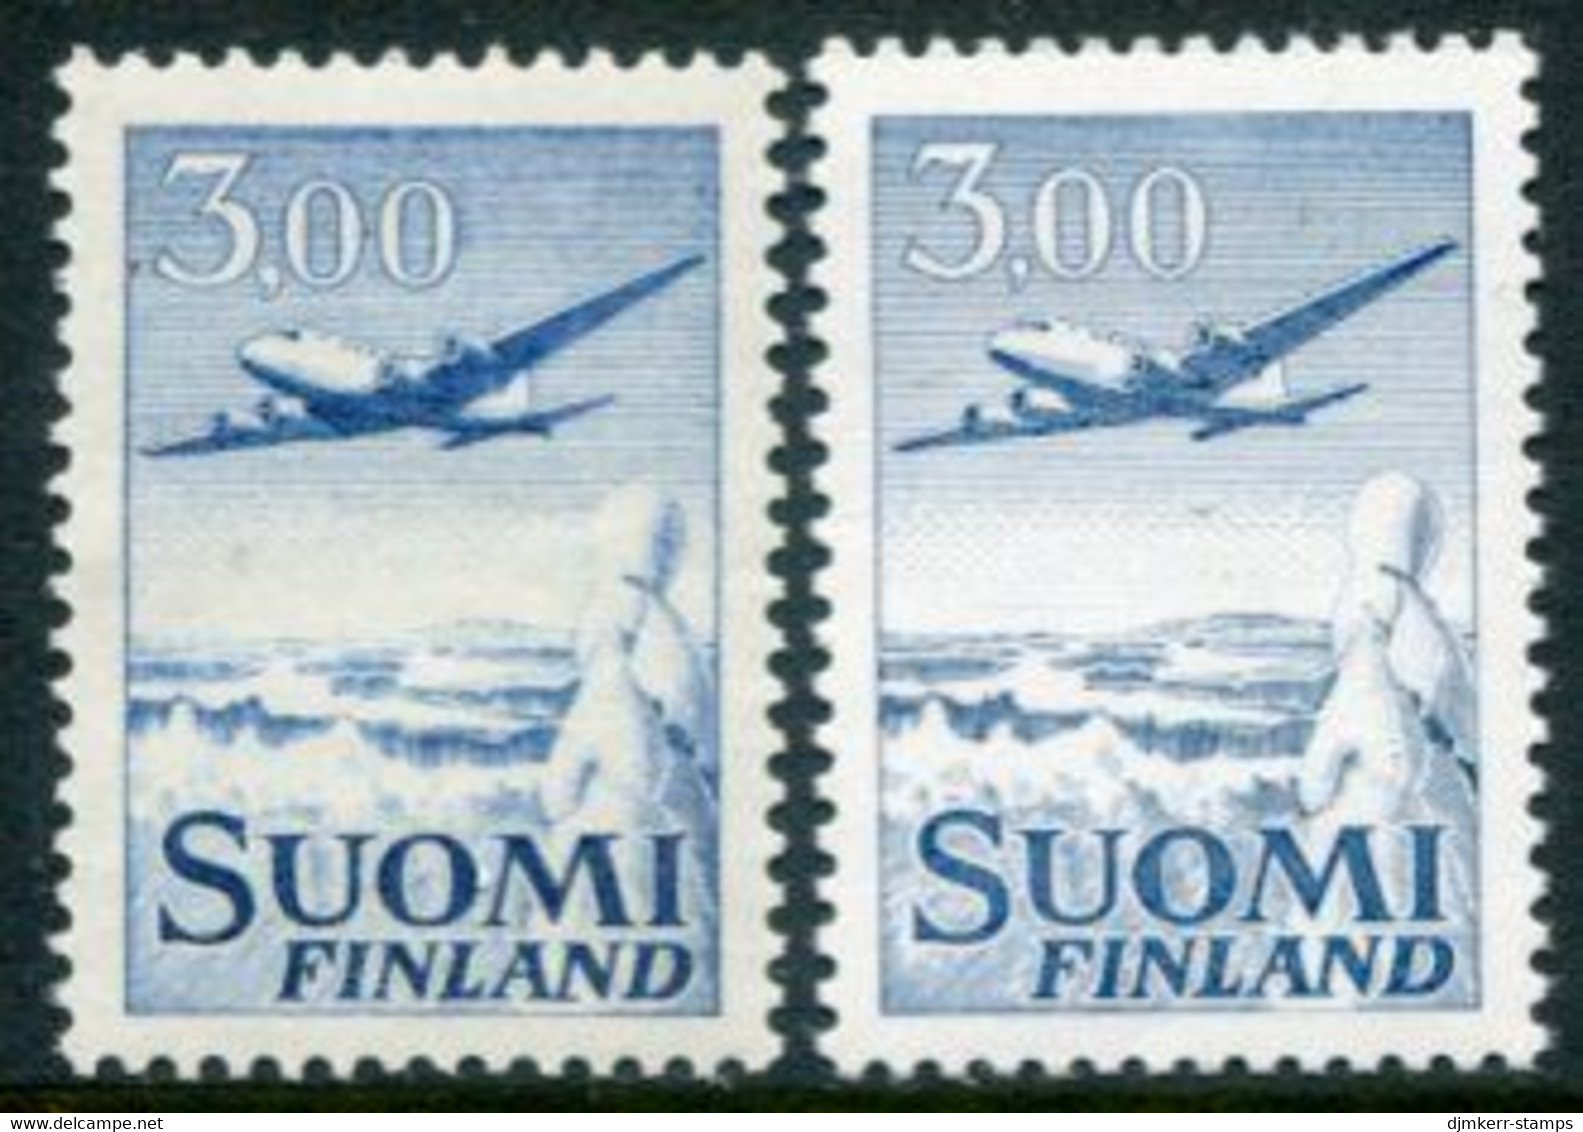 FINLAND 1963  Airmail 3.00 M. Both Types MNH / **  Michel 579x I, 579y II - Neufs